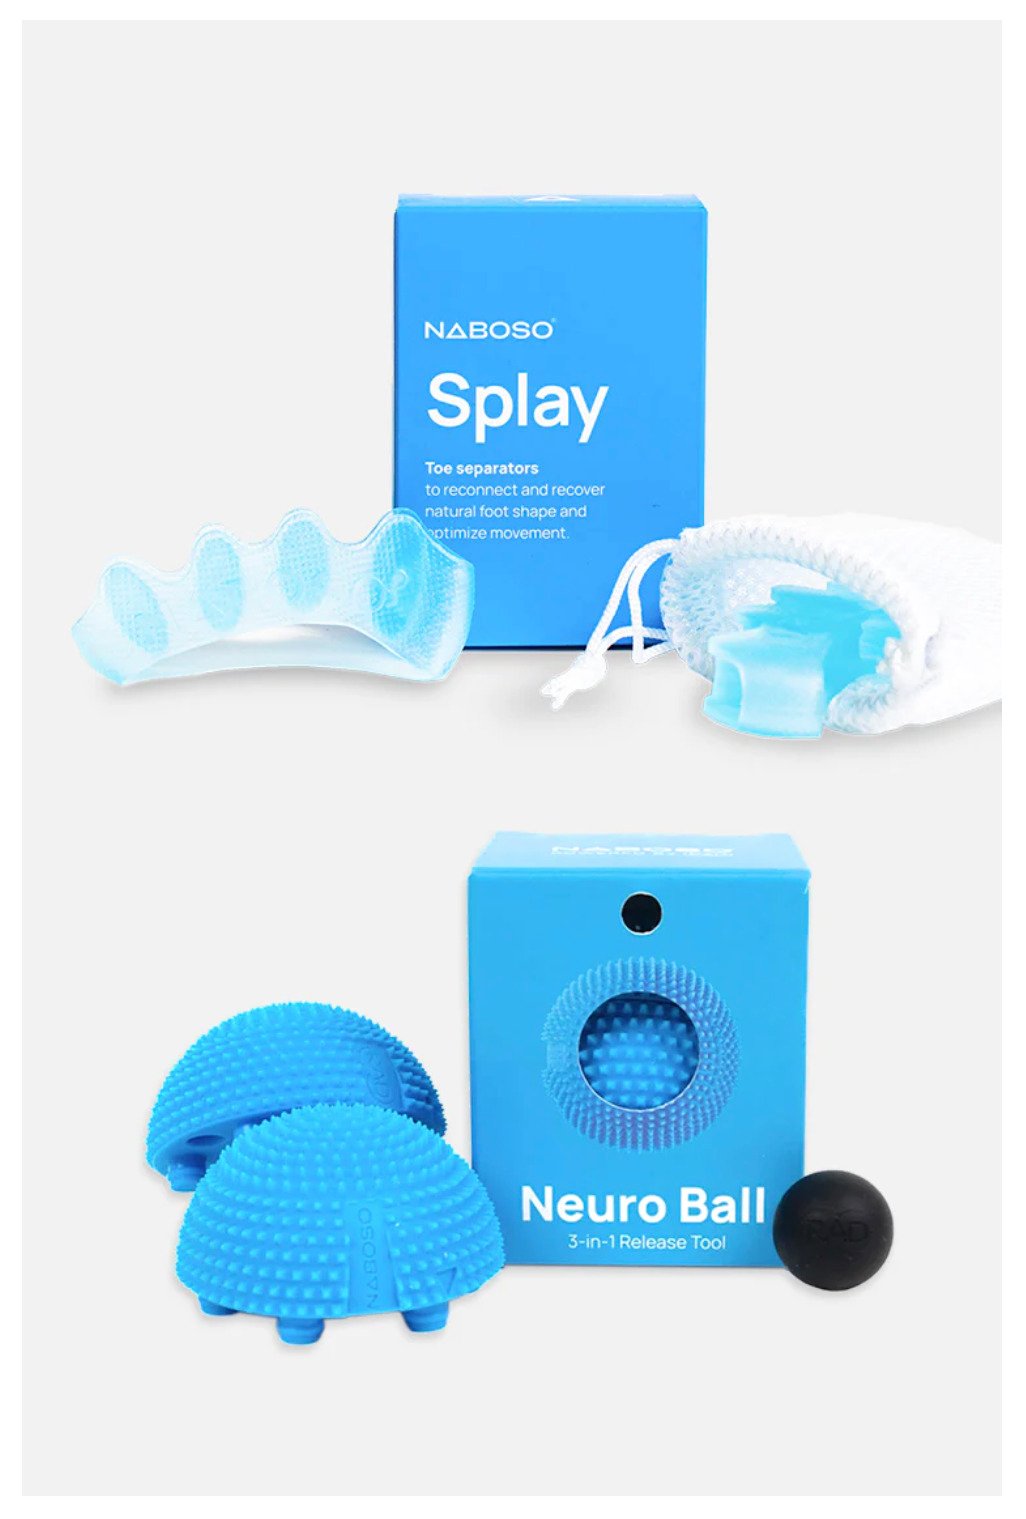 Naboso Splay toe separators